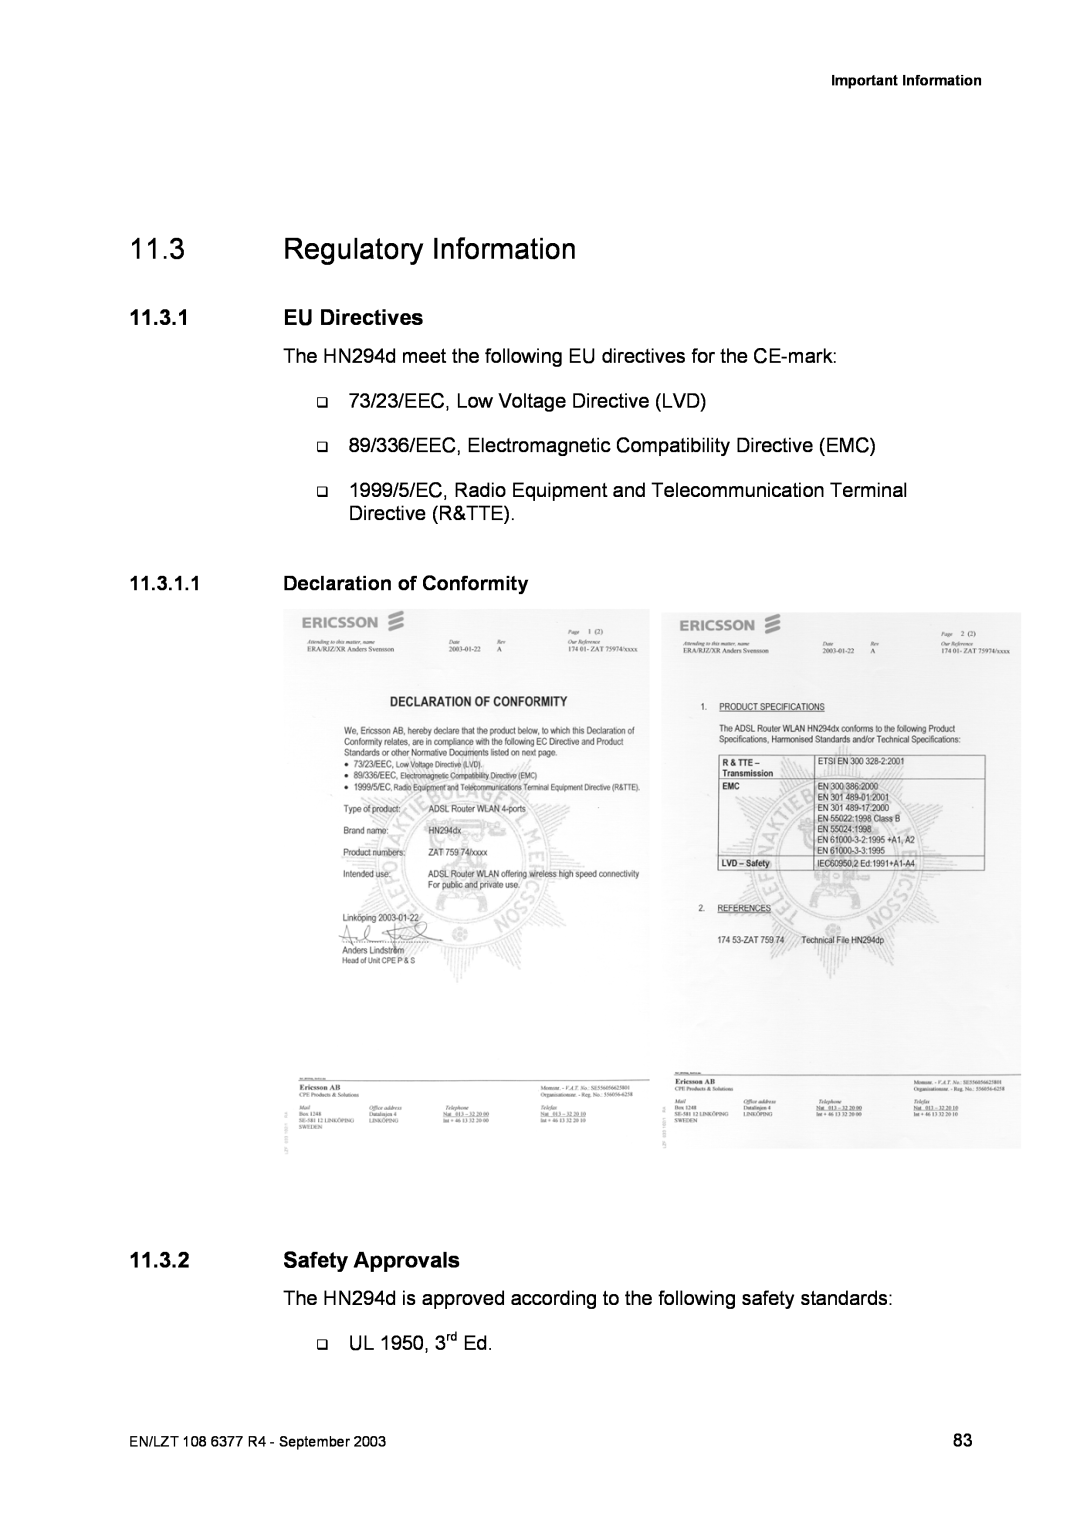 Garmin HN294DP/DI manual Regulatory Information, EU Directives, Safety Approvals, Declaration of Conformity 